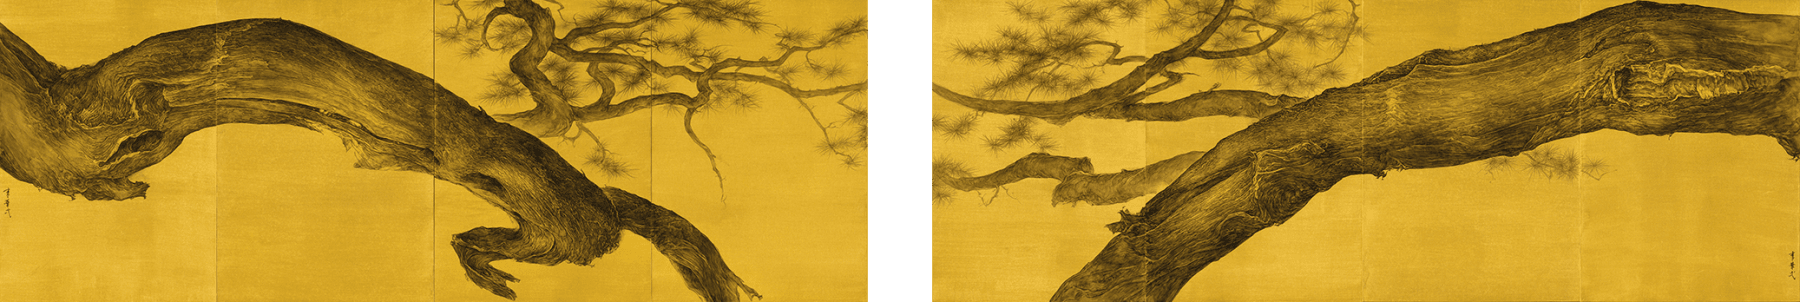 Li Huayi 李華弌, Calligraphic Pines (左)《帖書松》(右)《碑意松》, 2015